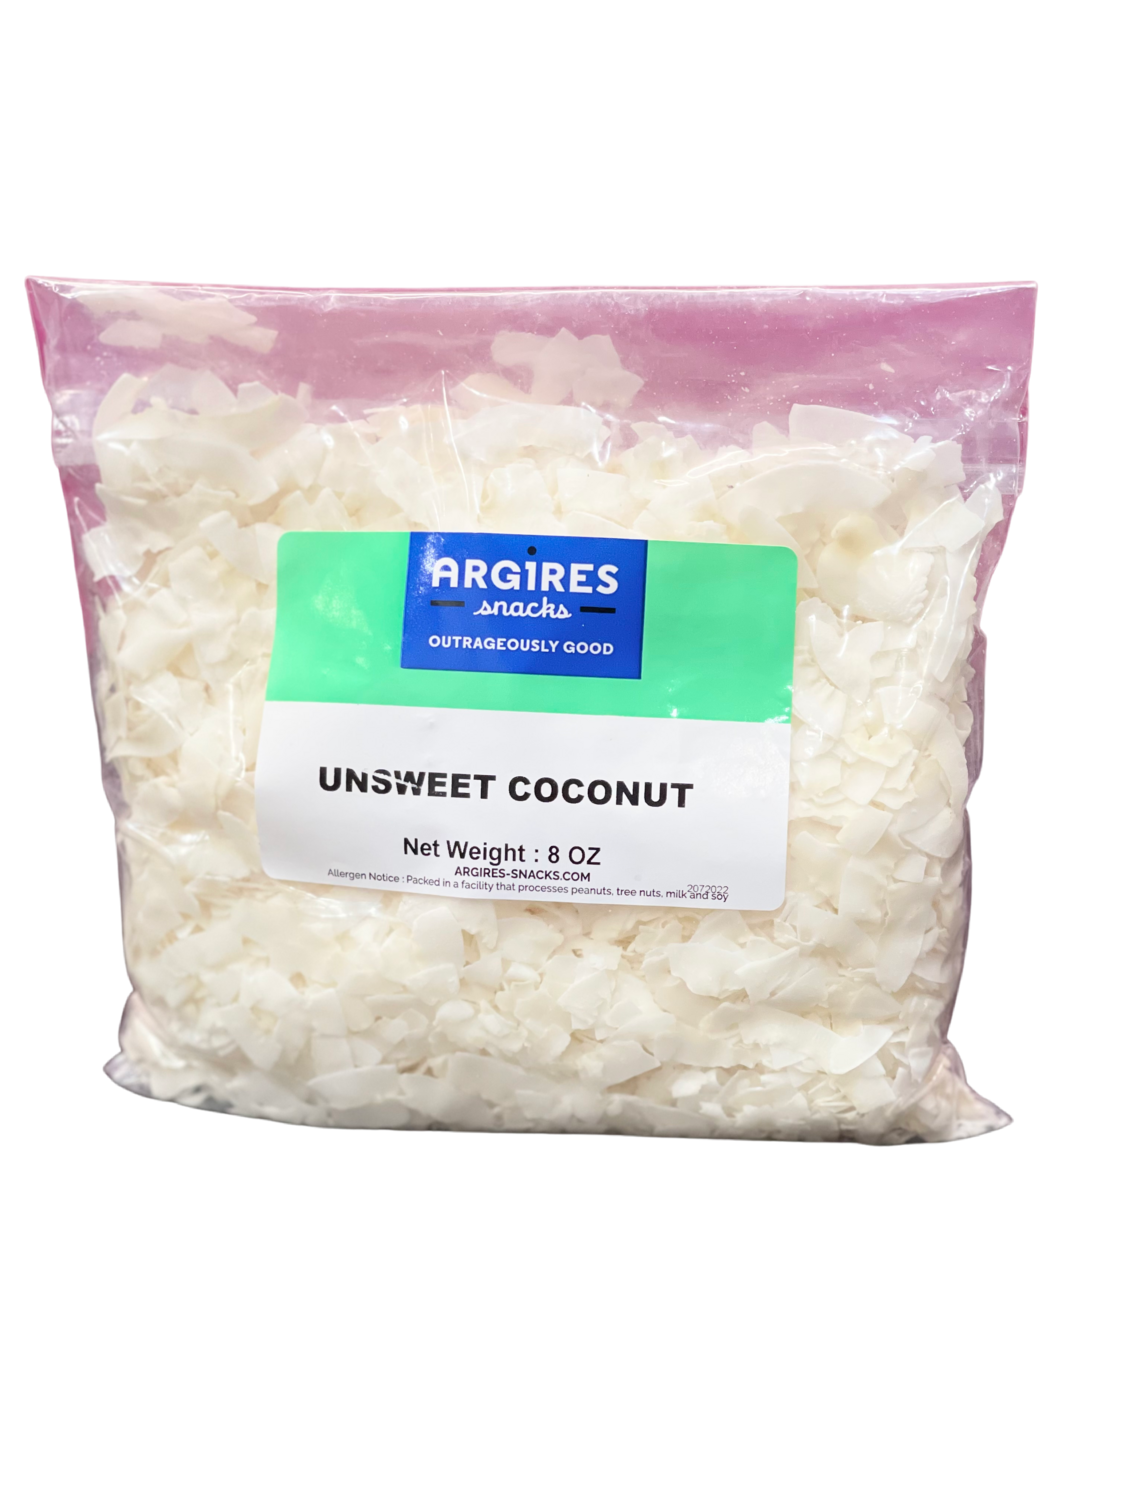 8 oz unsweetened shredded coconut